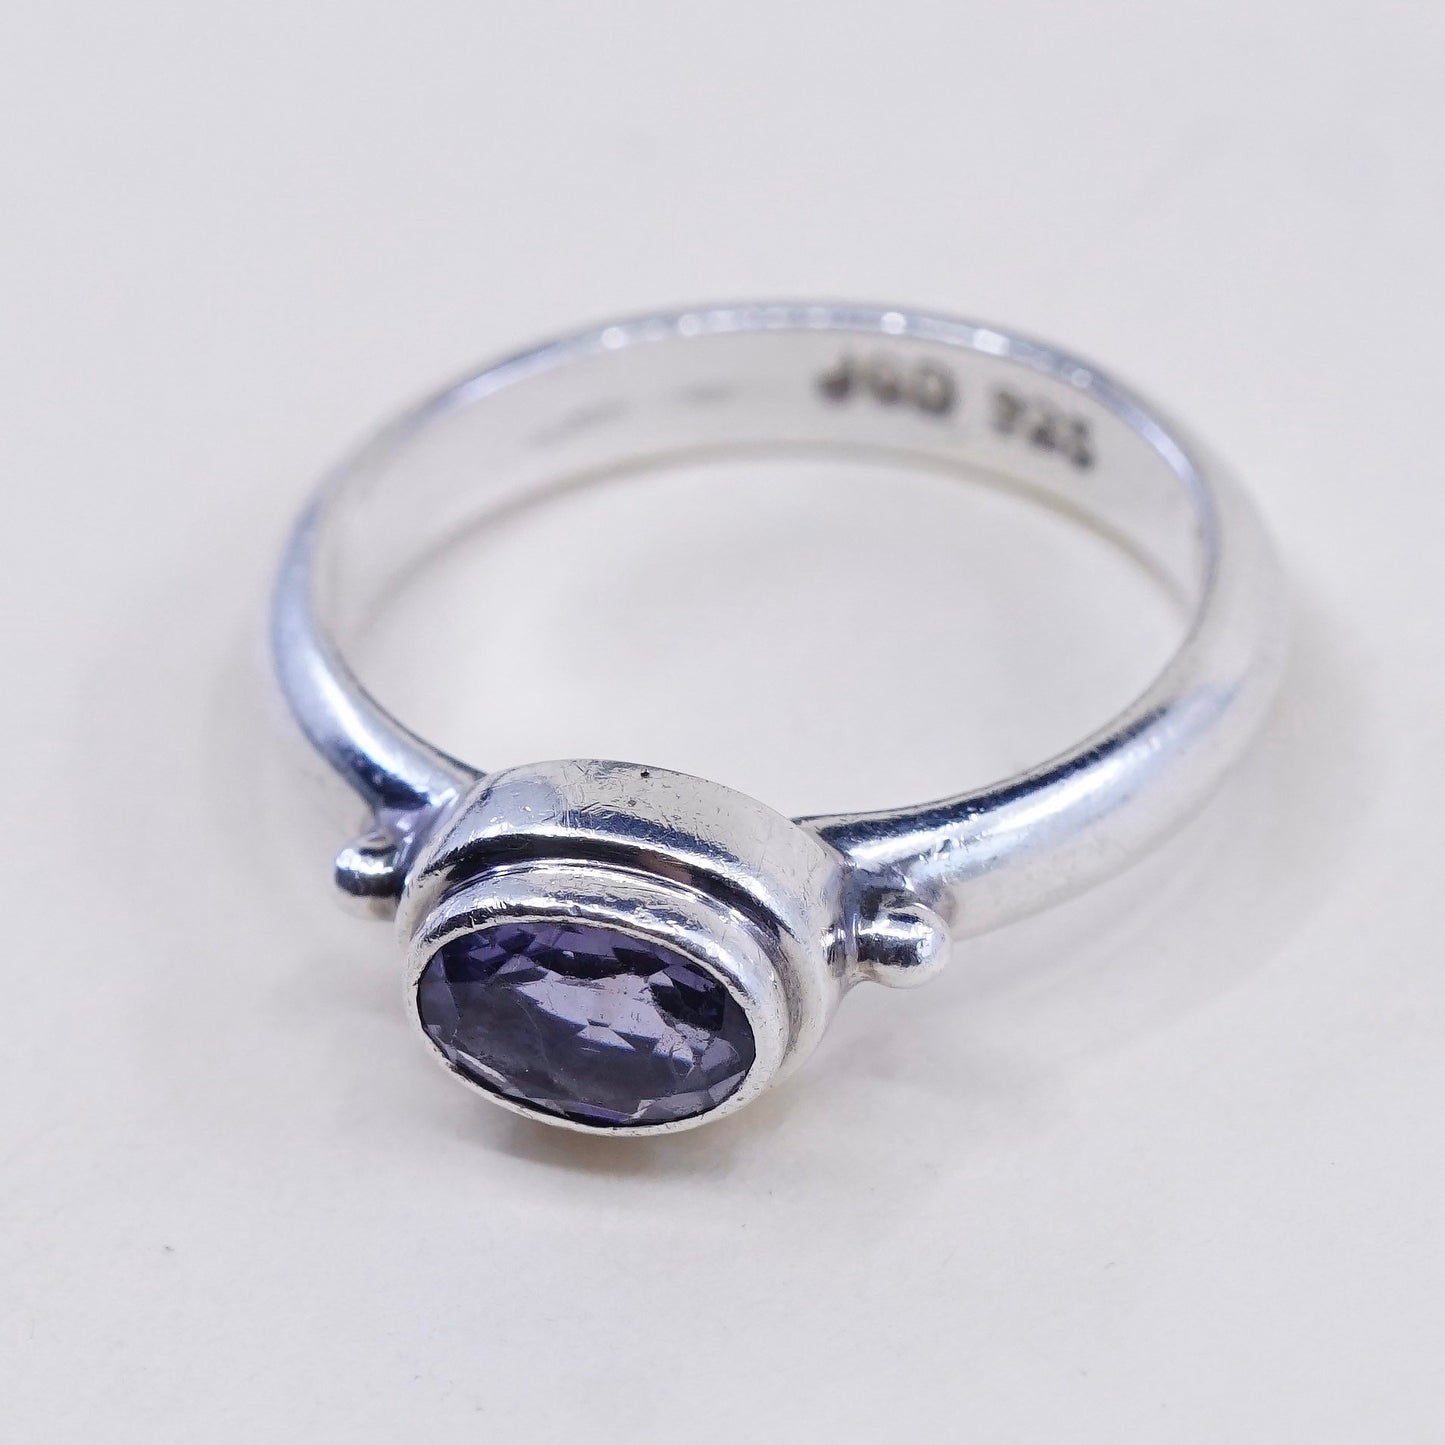 Size 7, Vintage JBD sterling 925 silver handmade ring with amethyst, modernist